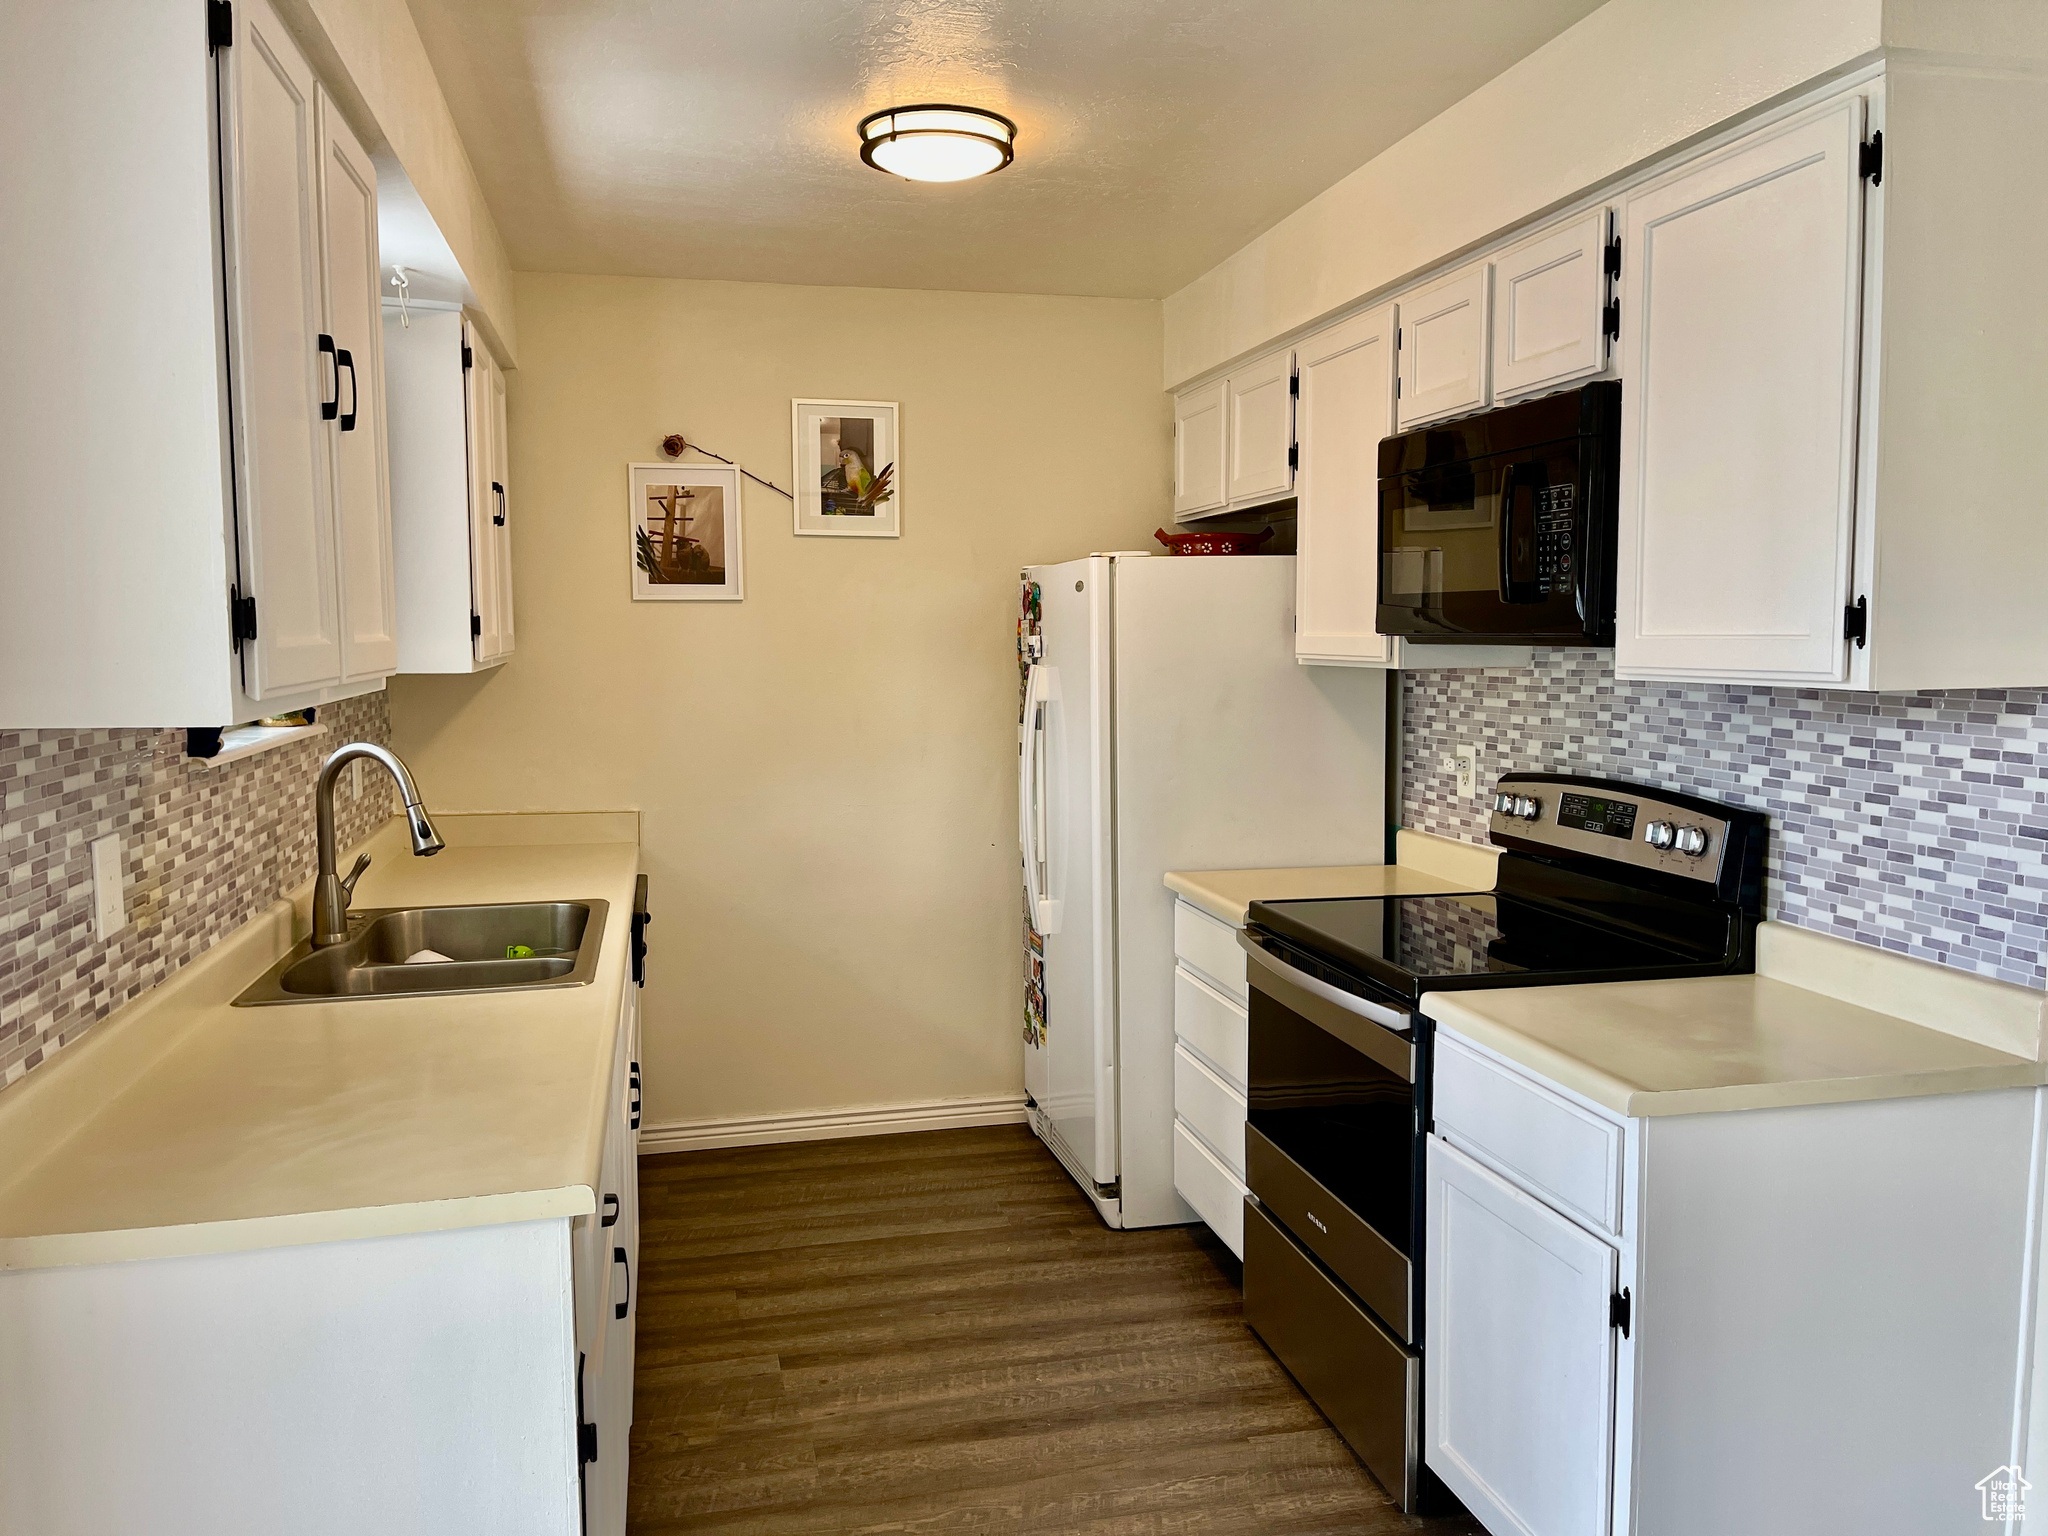 Kitchen with white cabinets, sink, tasteful backsplash, stainless steel electric range oven, and dark hardwood / wood-style floors